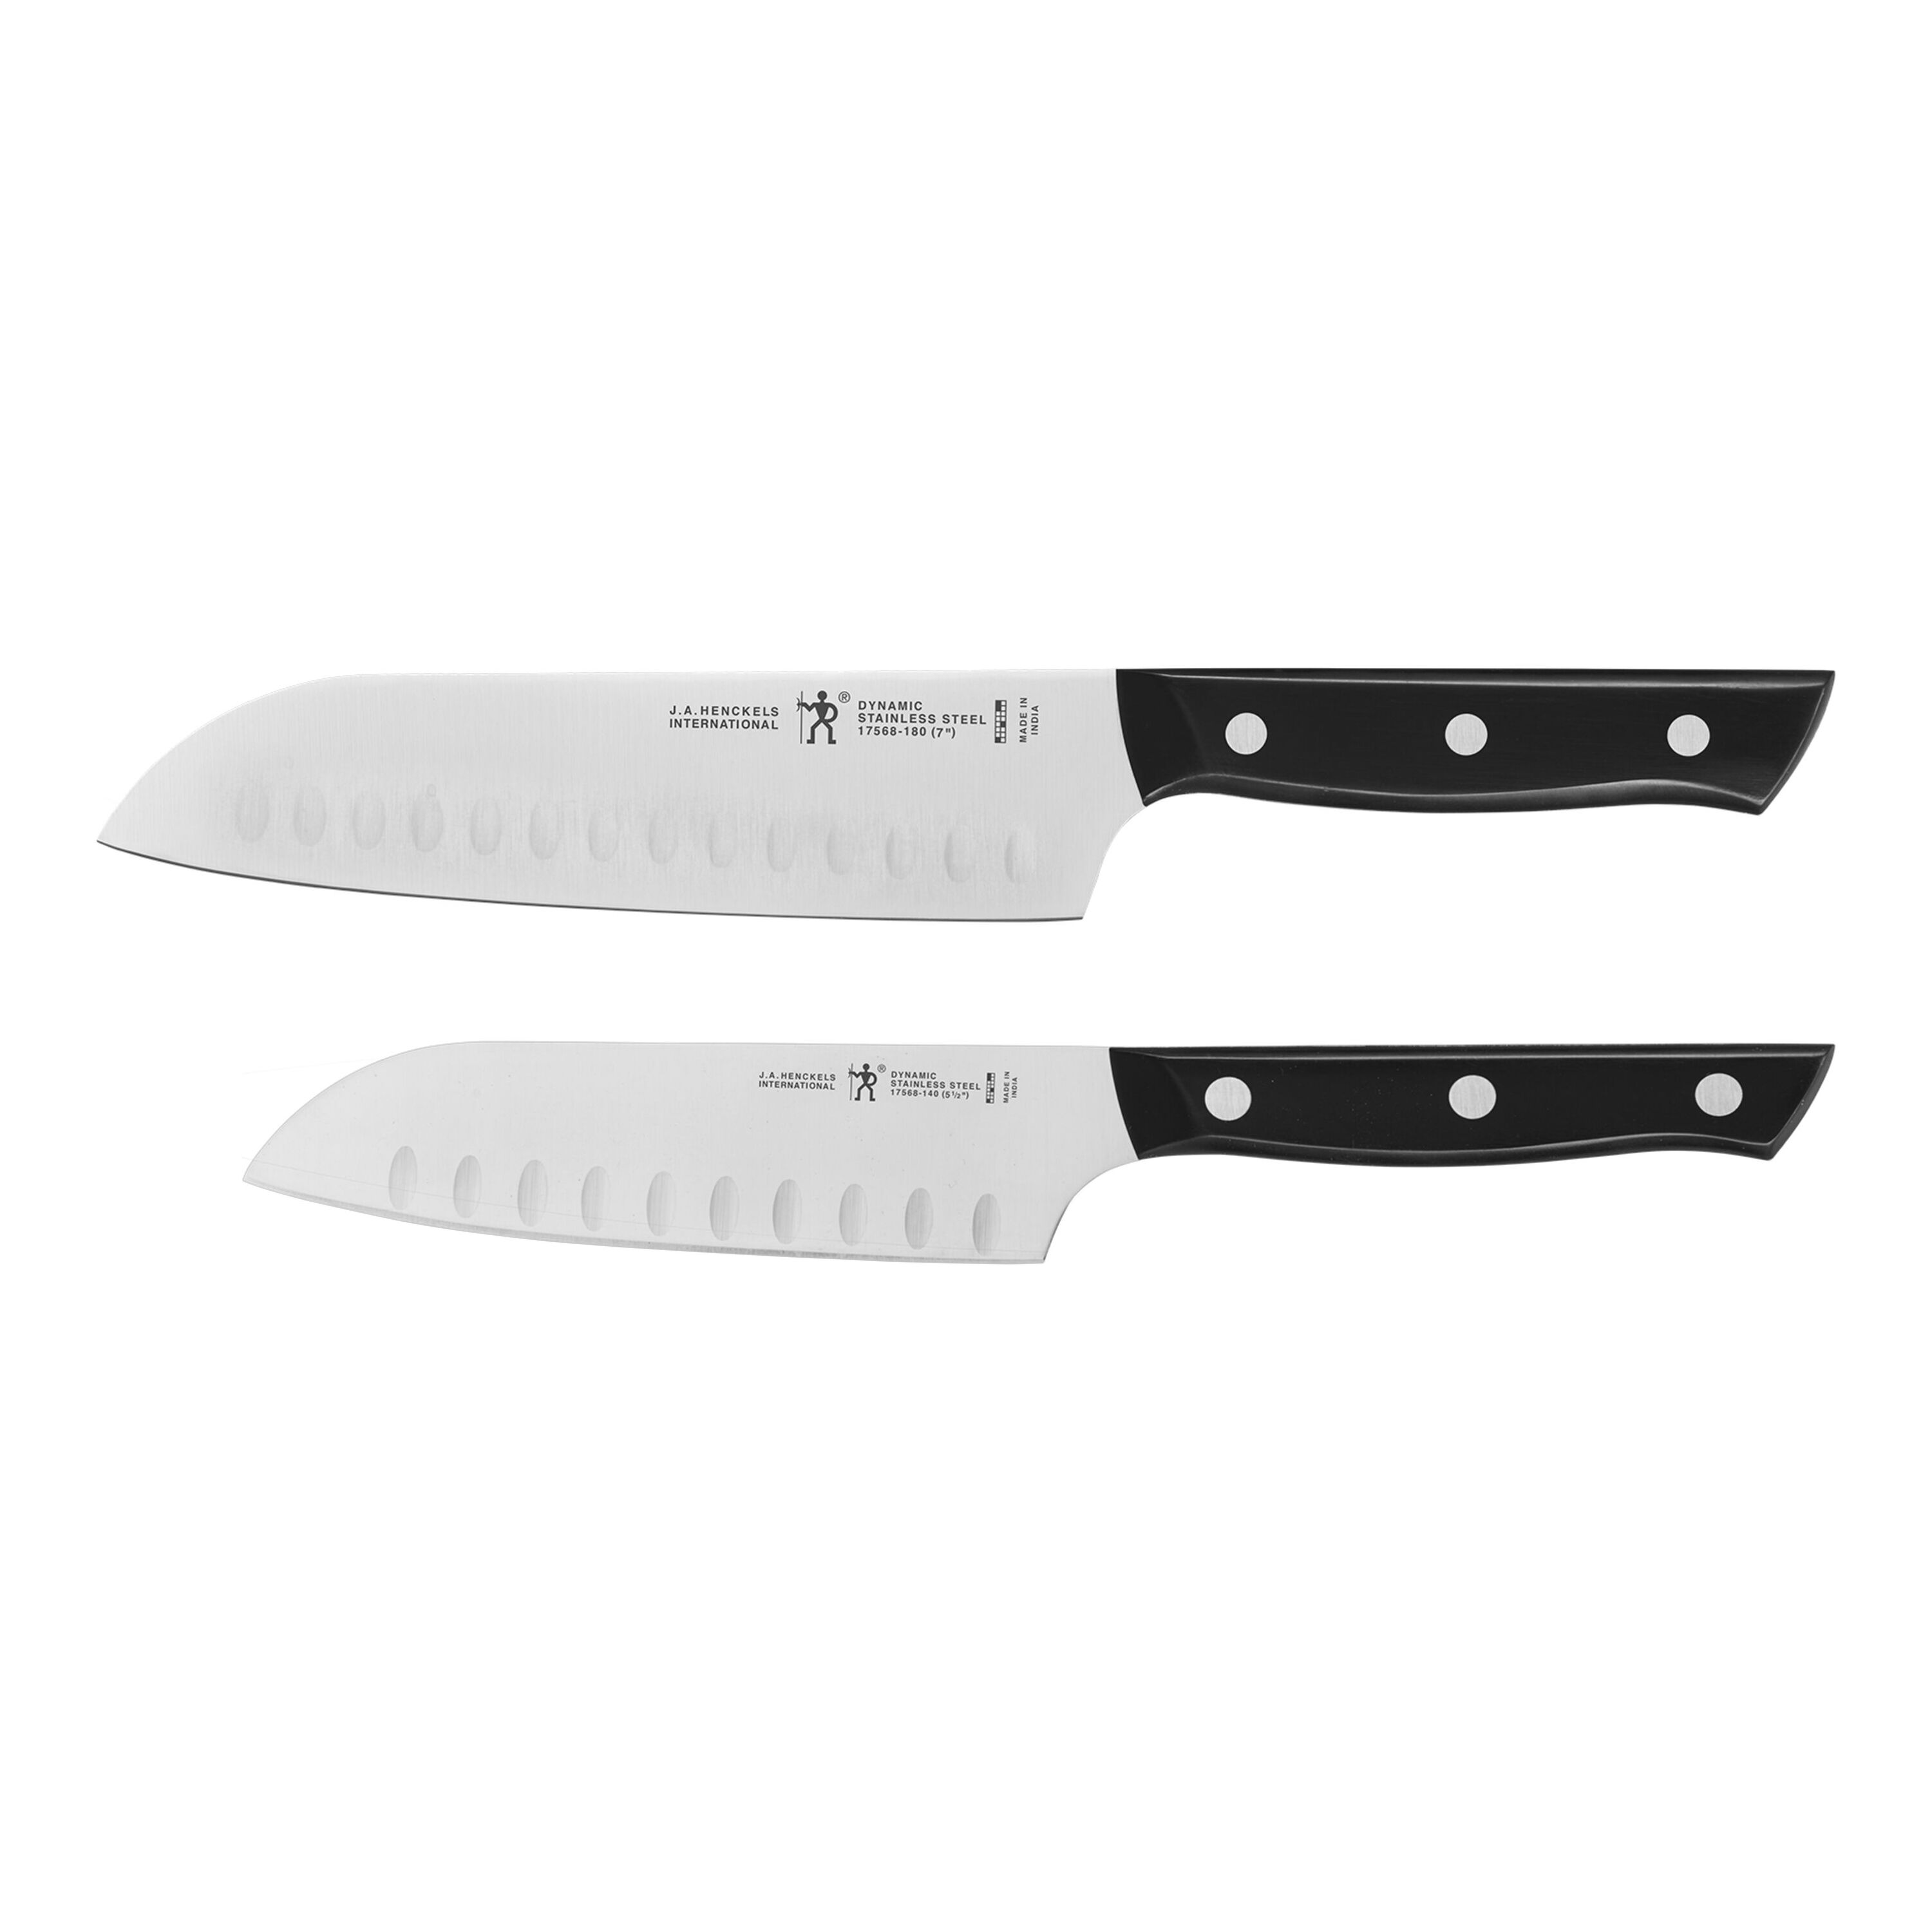 Swedish Fork Knife :: ergonomic handle arthritis knife for food prep